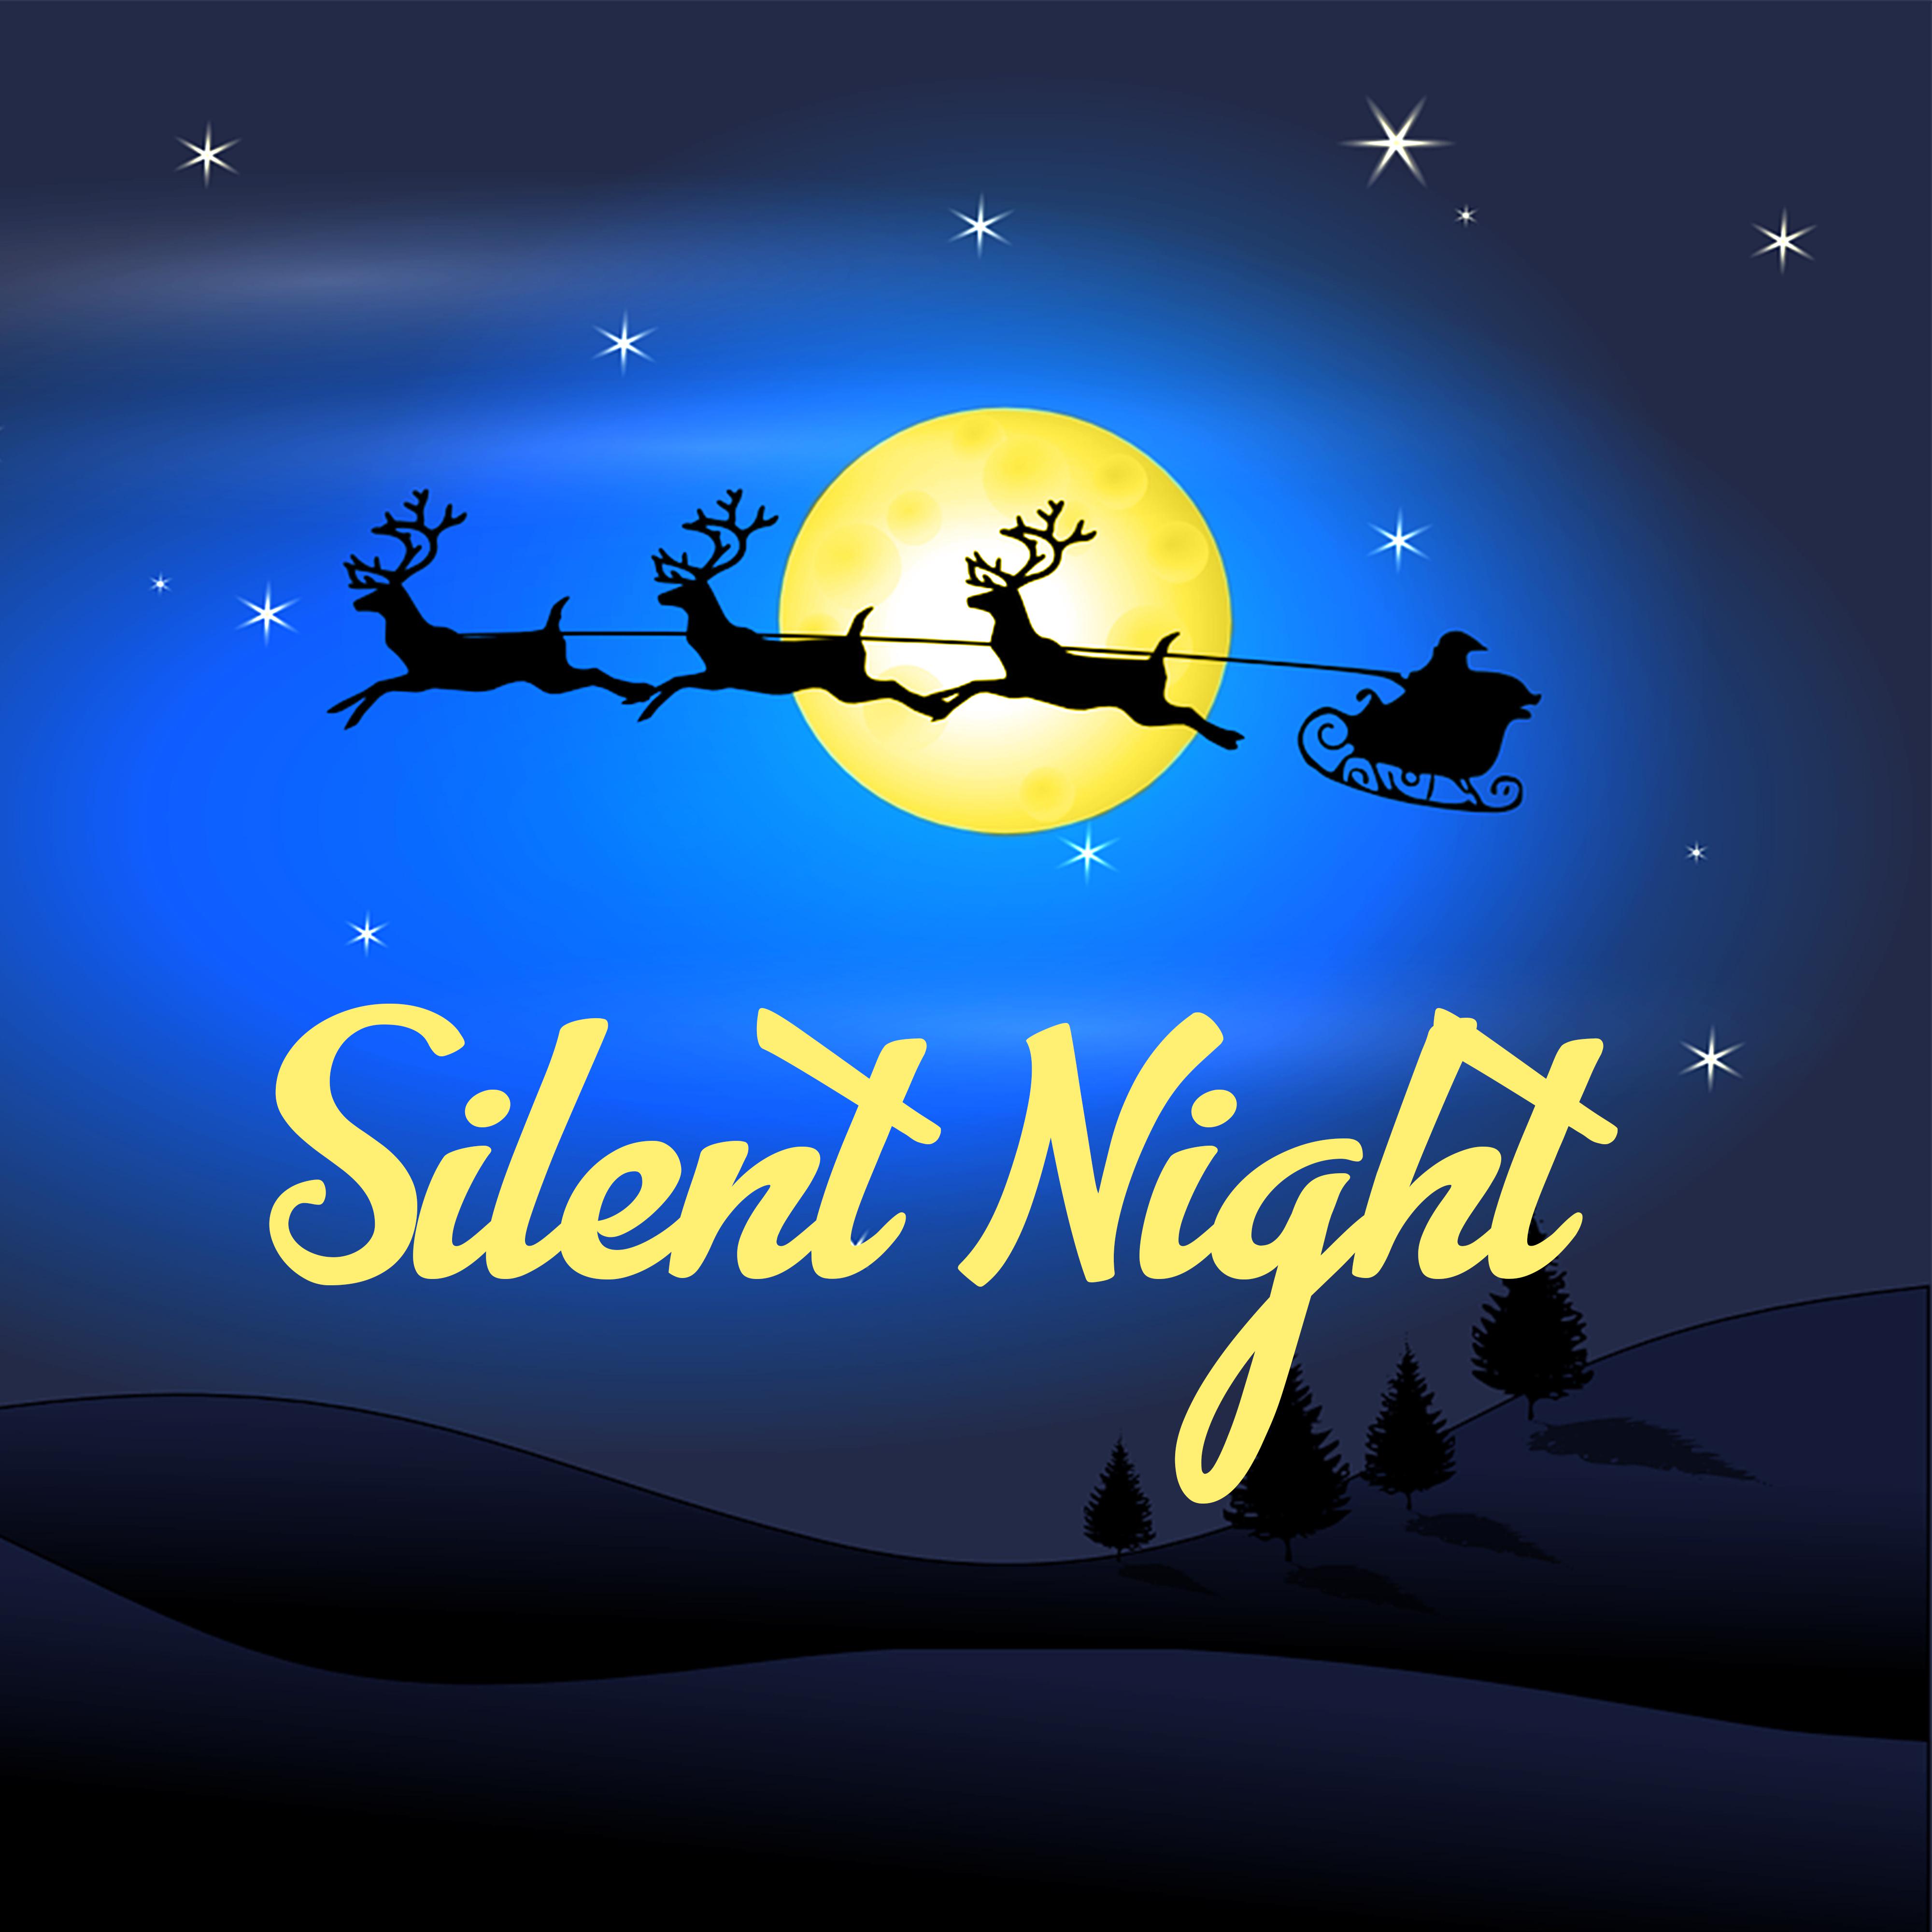 Silent Night – Traditional, Christmas Carols, White Holiday, Wonderful Christmas Time, Magical Night, Christmas Songs for Baby